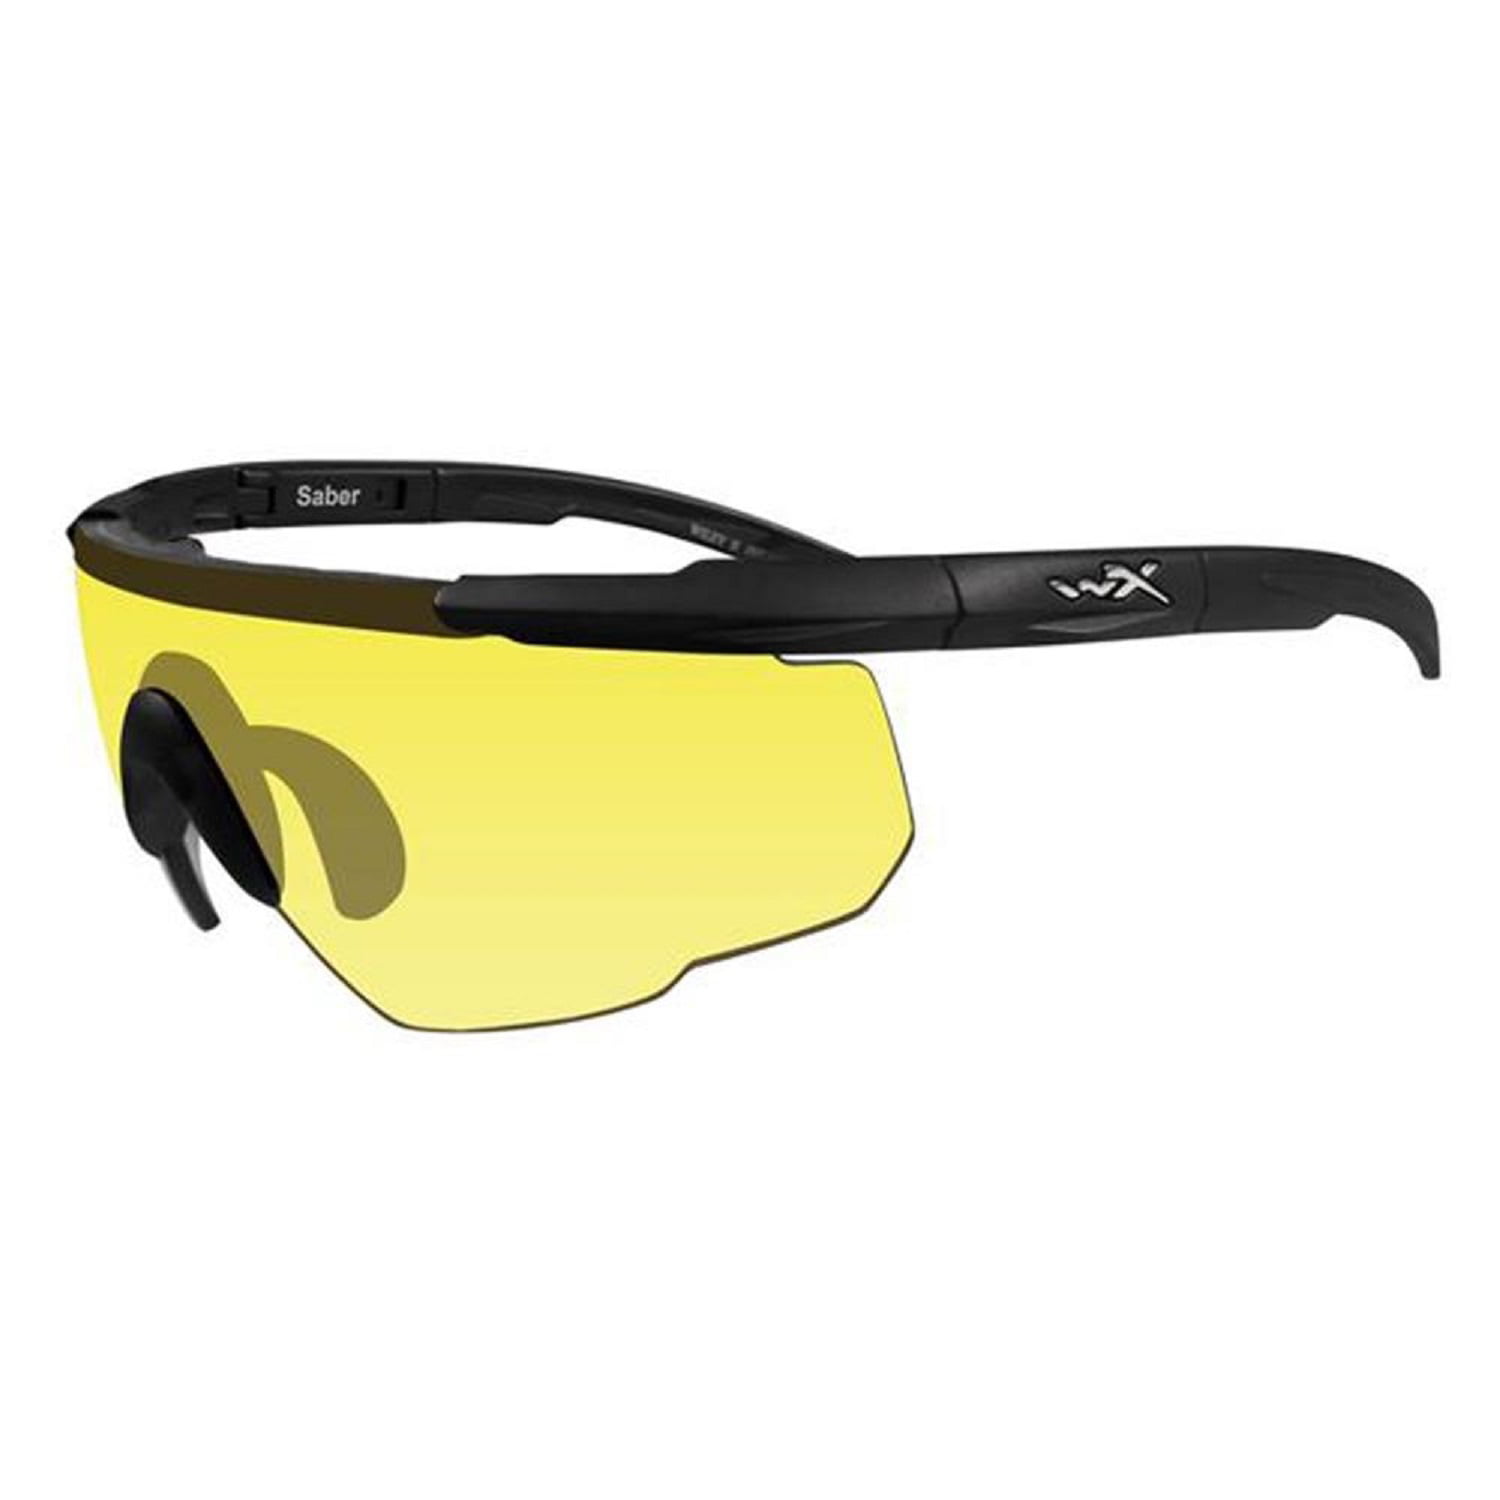 Wiley X Saber Advanced Shooting Glasses - Yellow/Black 